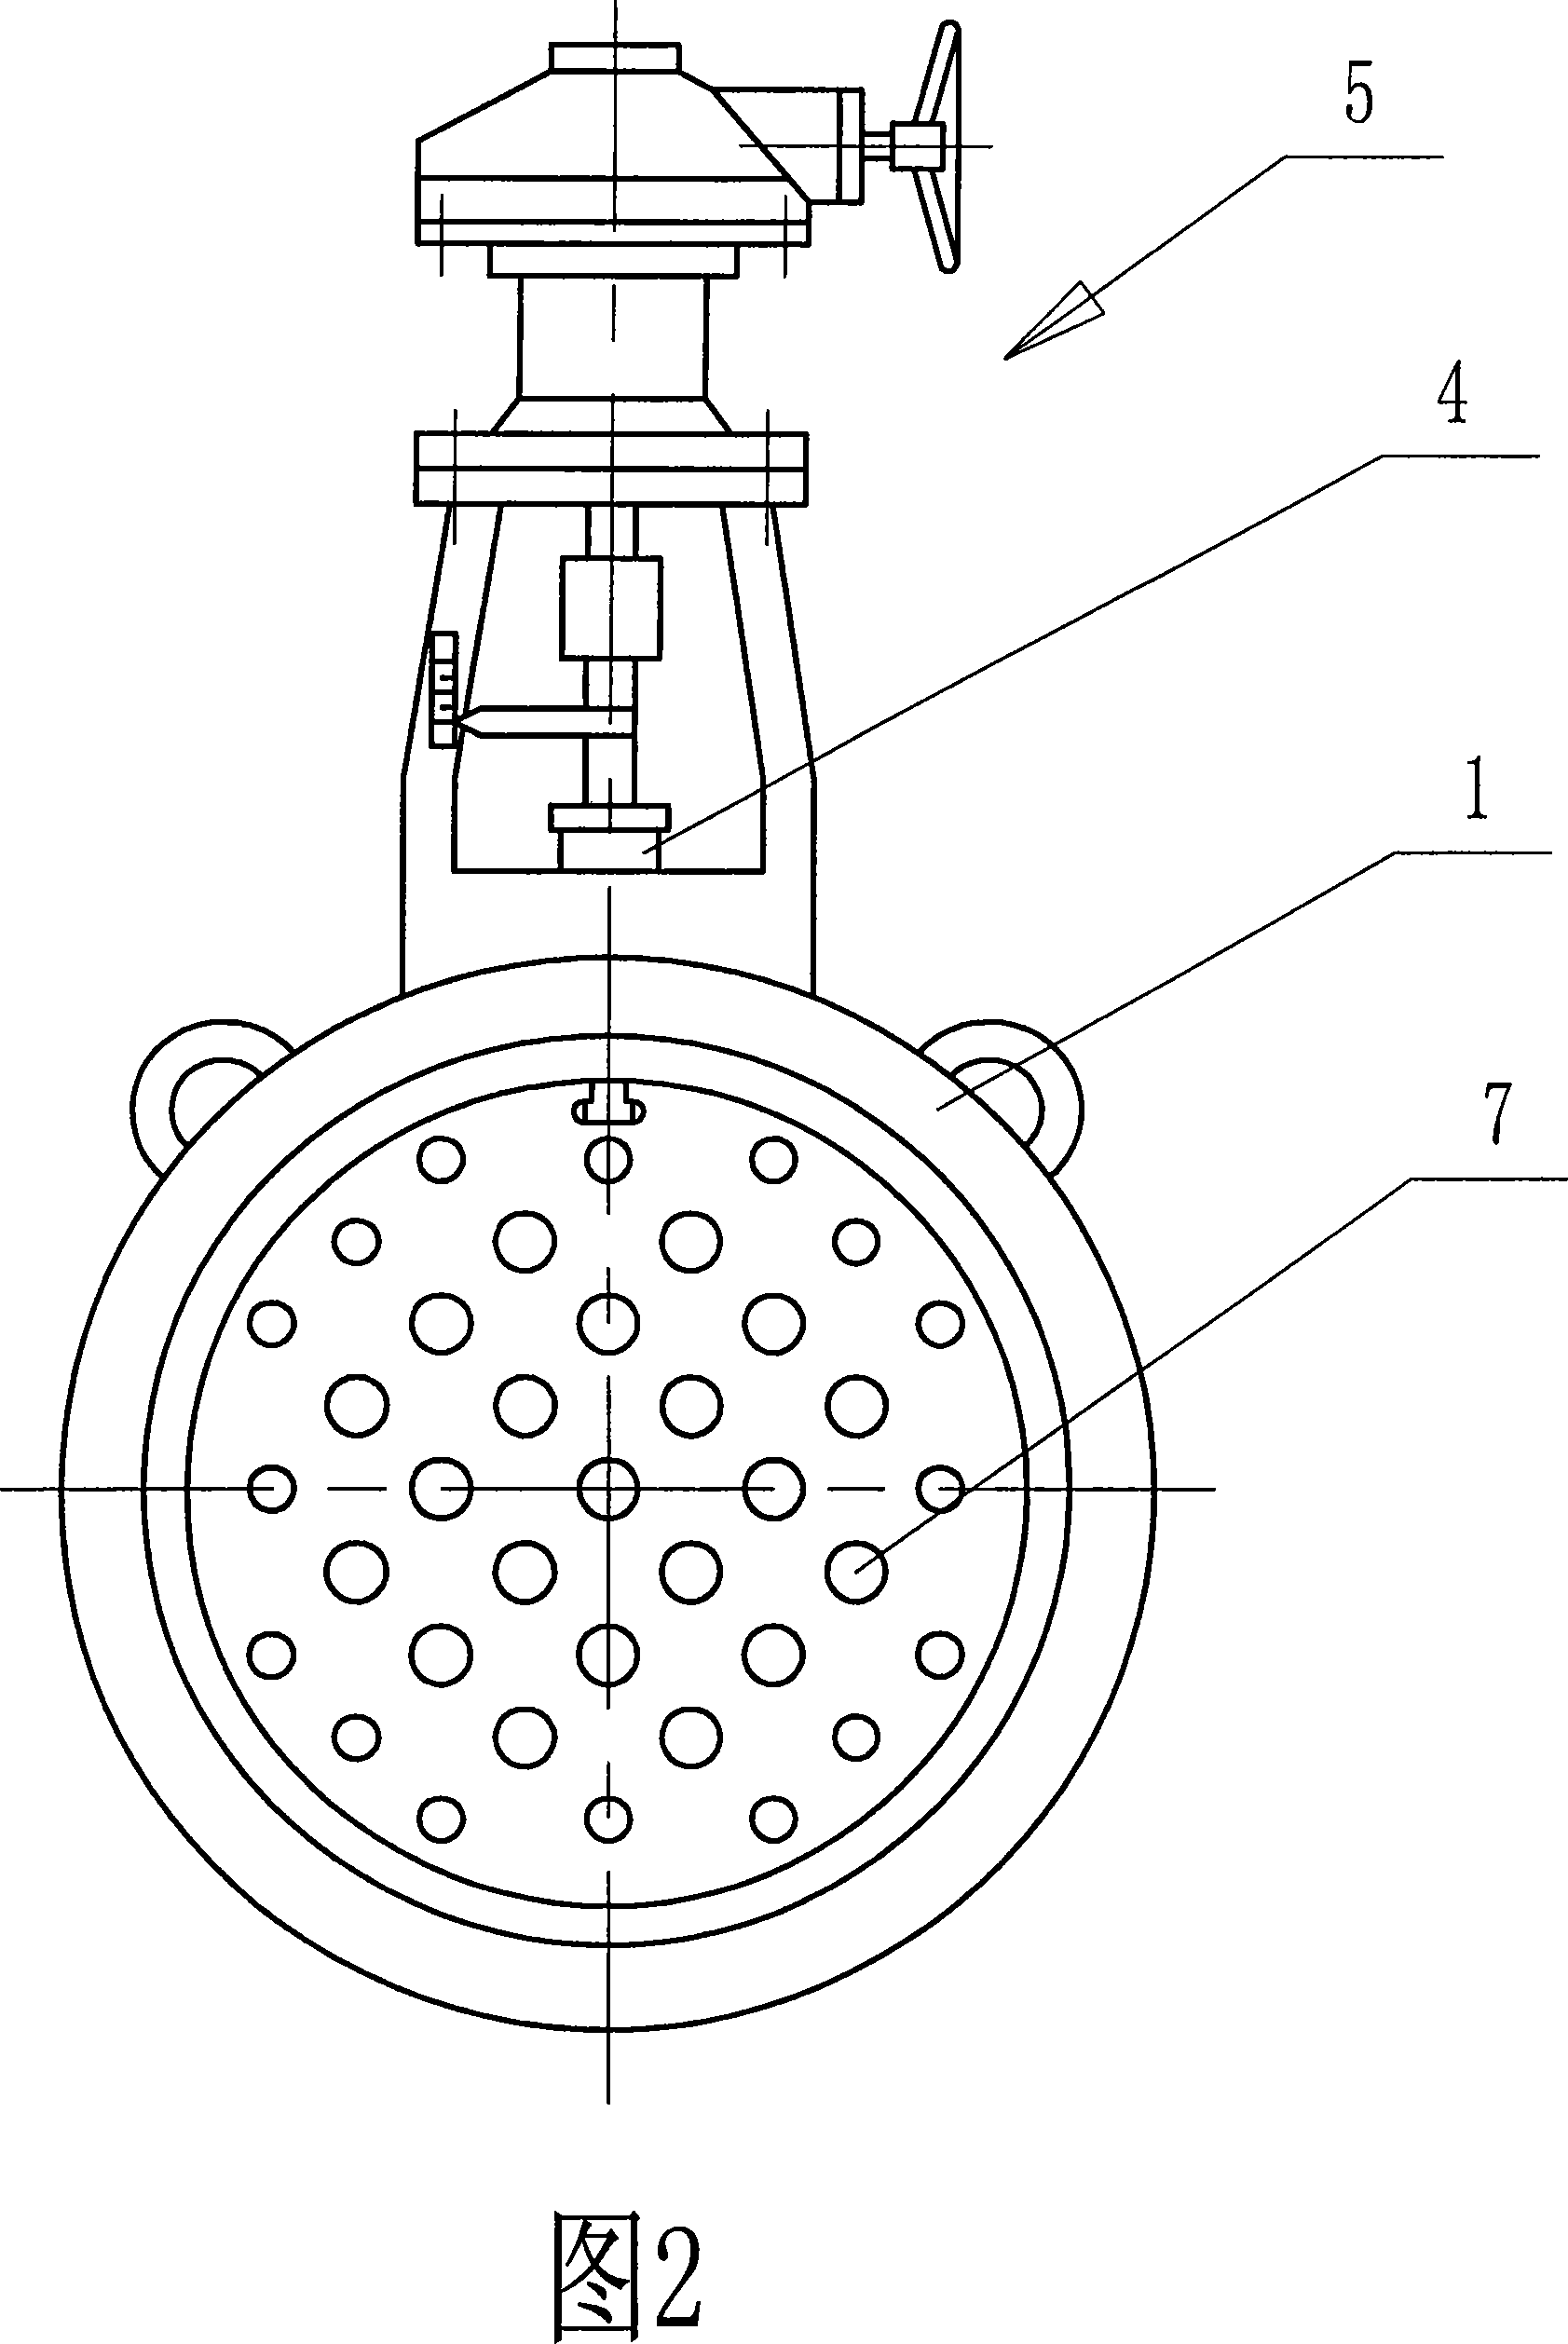 Opposite-clamping pore plate flow quantity adjusting valve